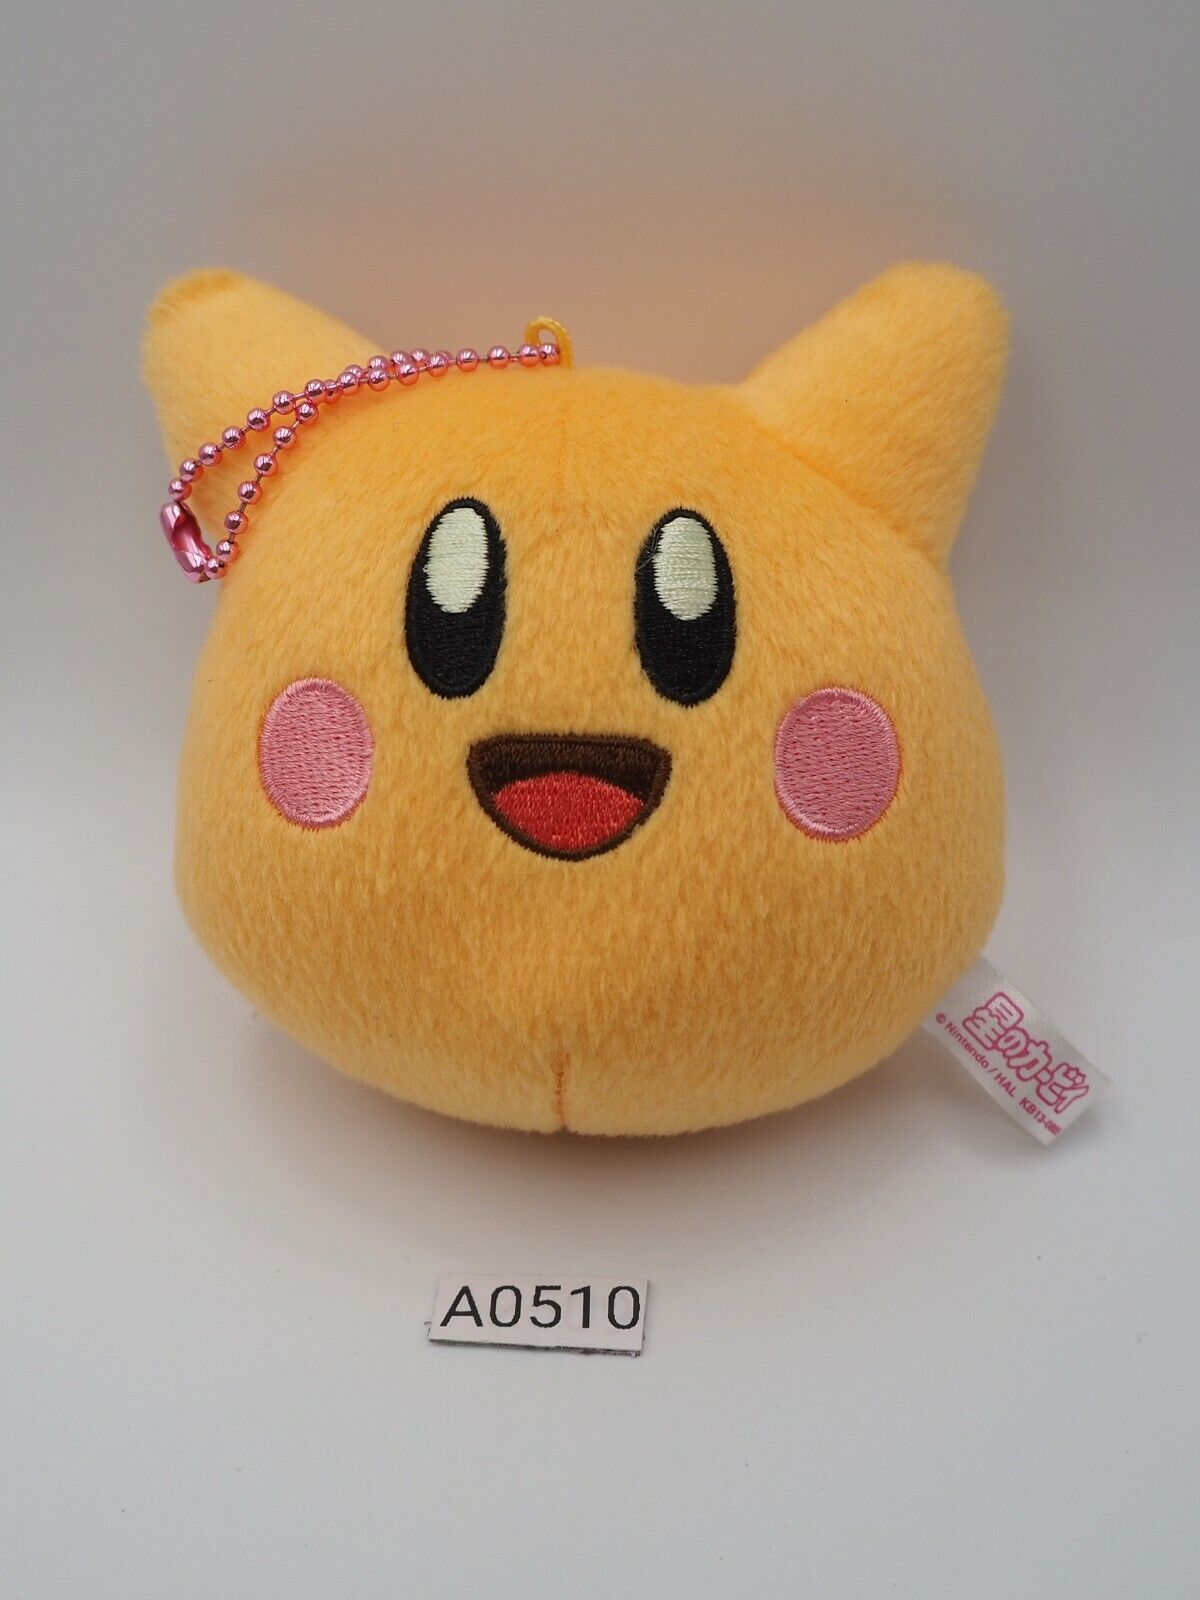 Kirby Dream Land A0510 Scarfy orange Sk Japan Keychain Mascot 4